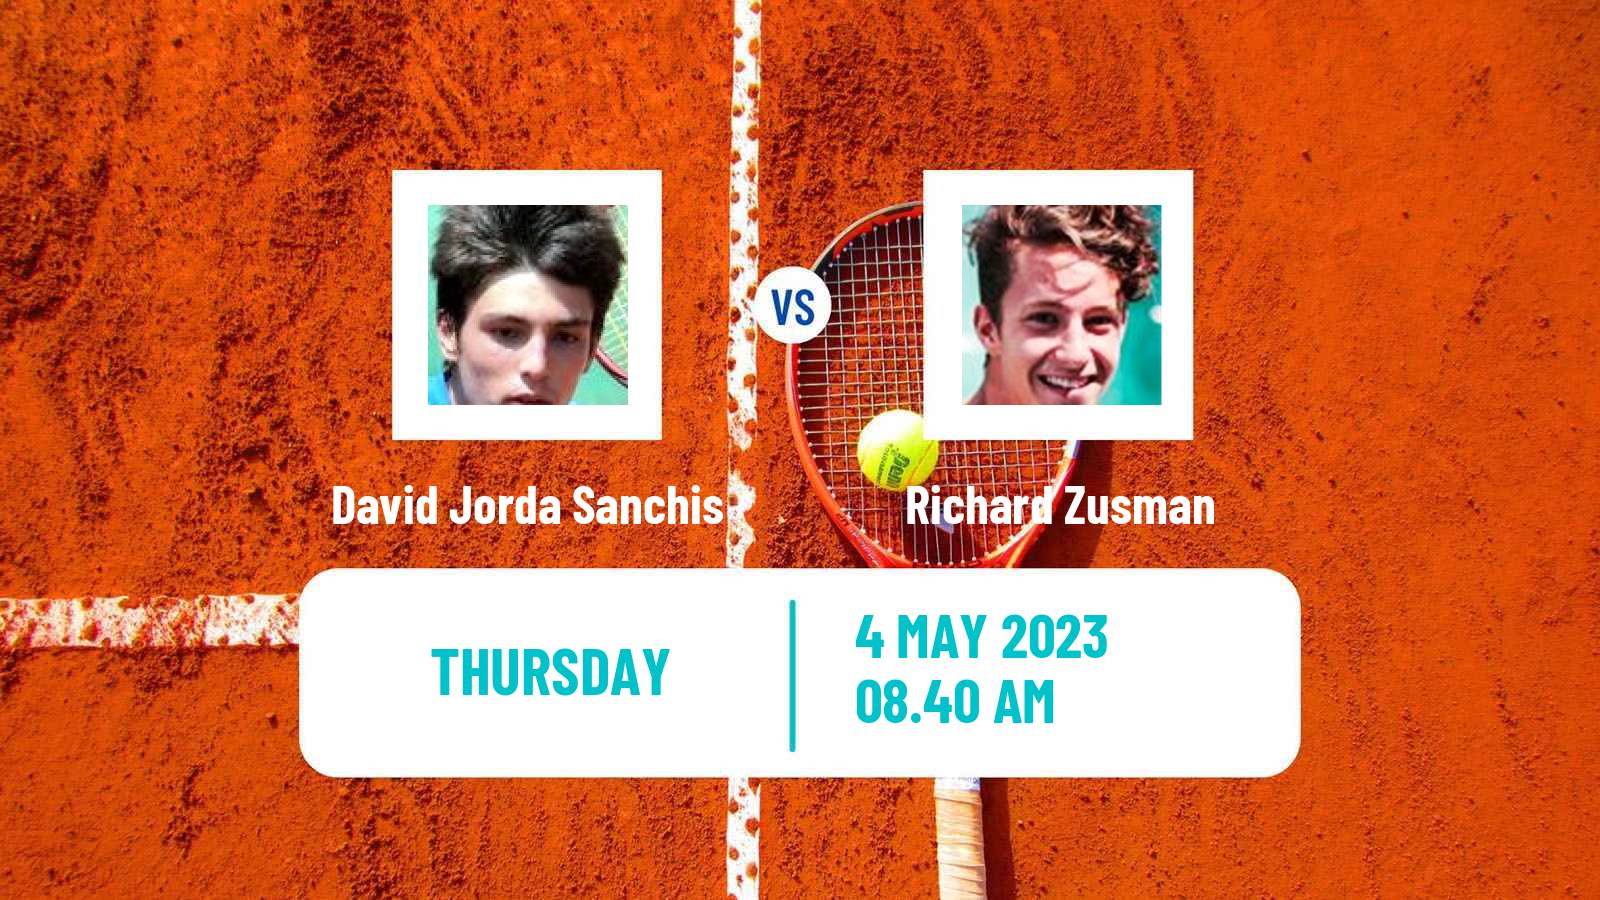 Tennis ITF Tournaments David Jorda Sanchis - Richard Zusman